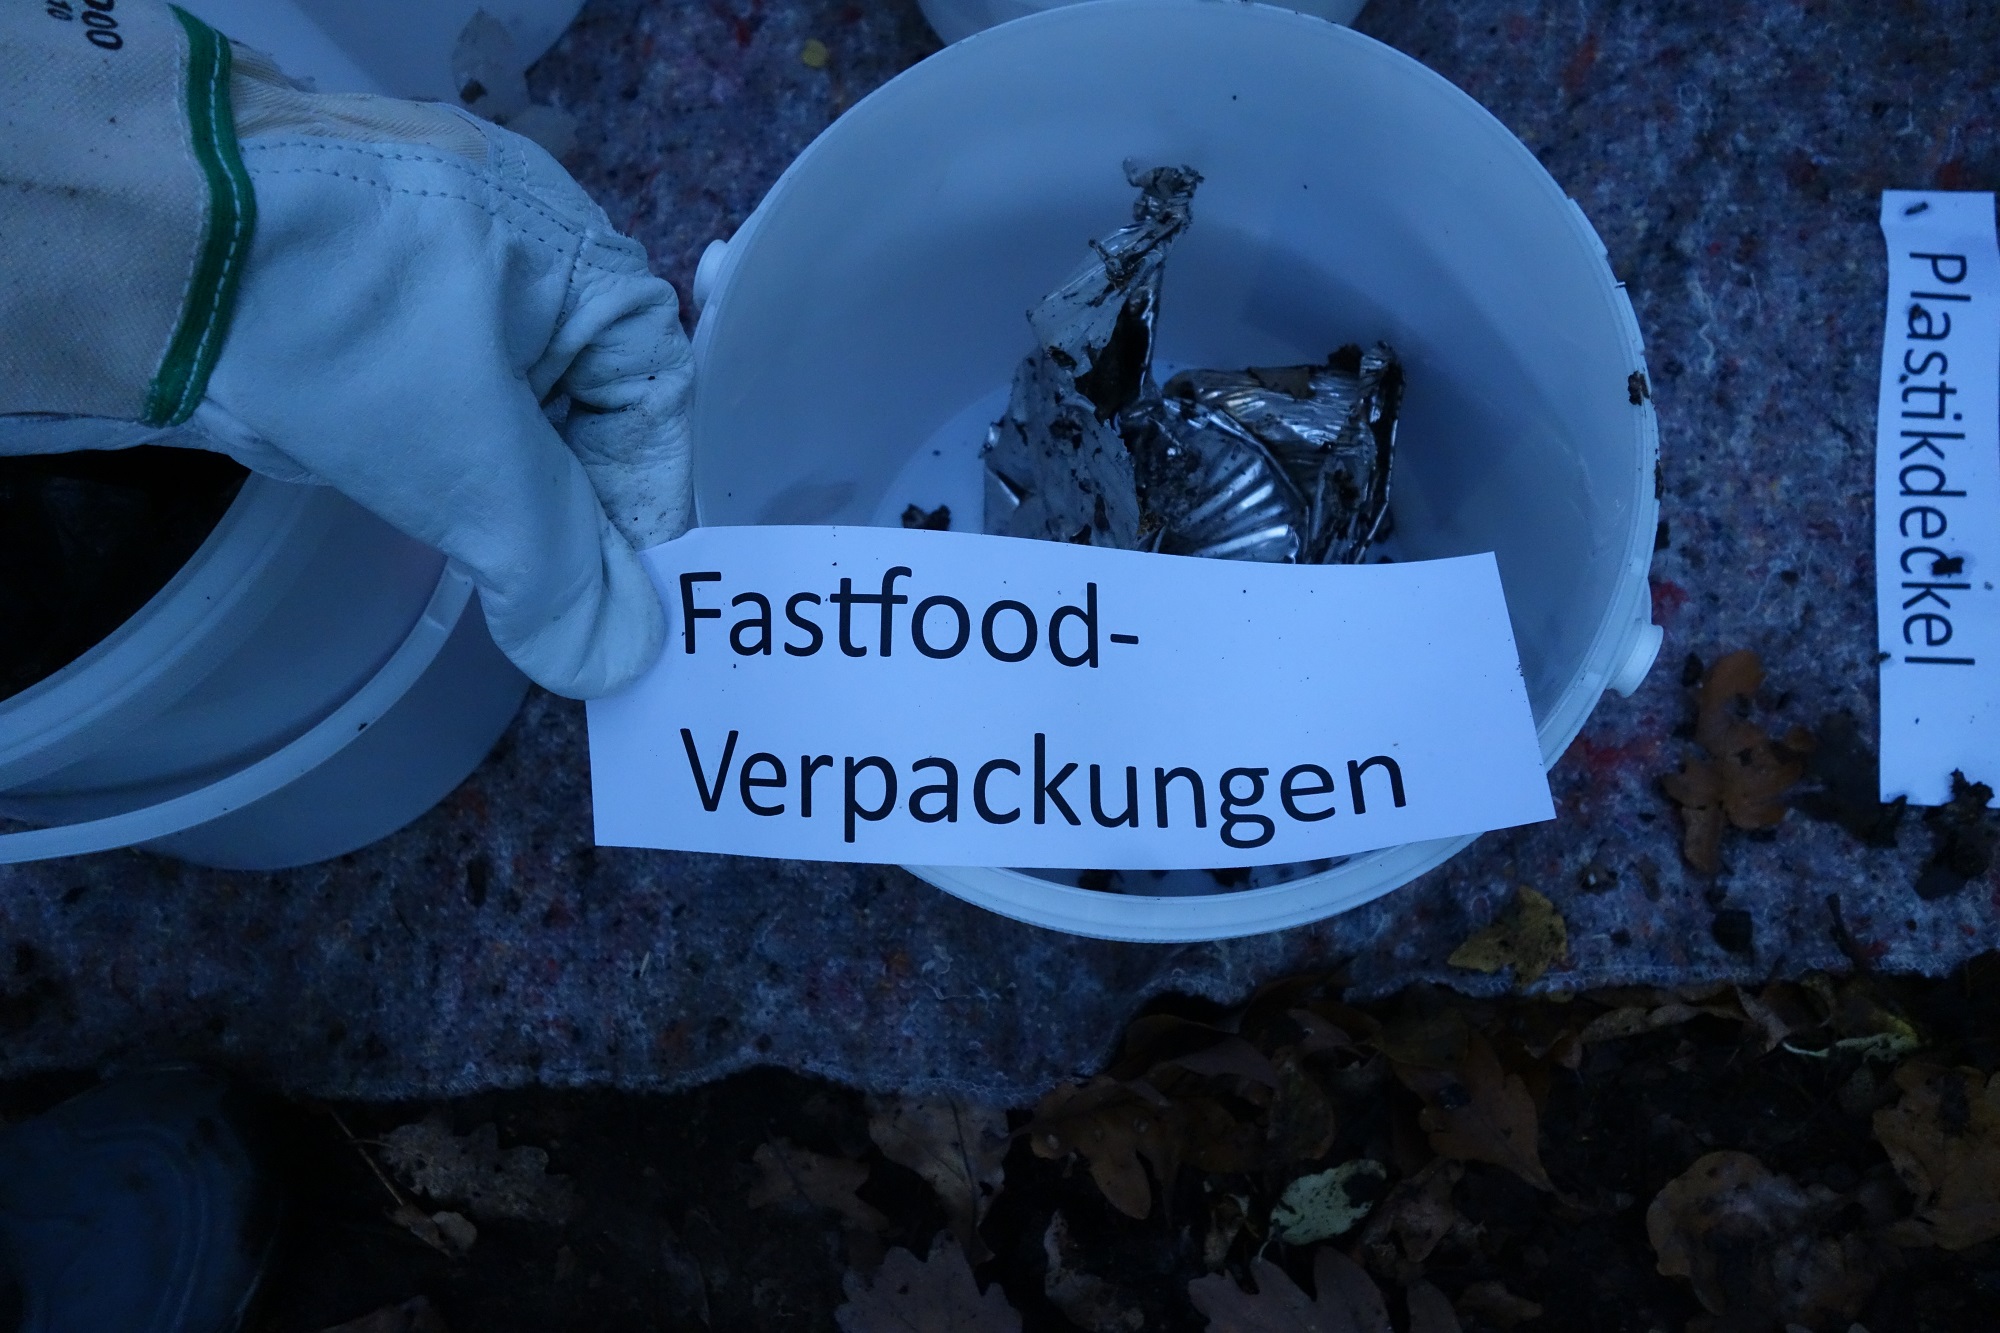 Fastfoodverpackungen_E_F.JPG